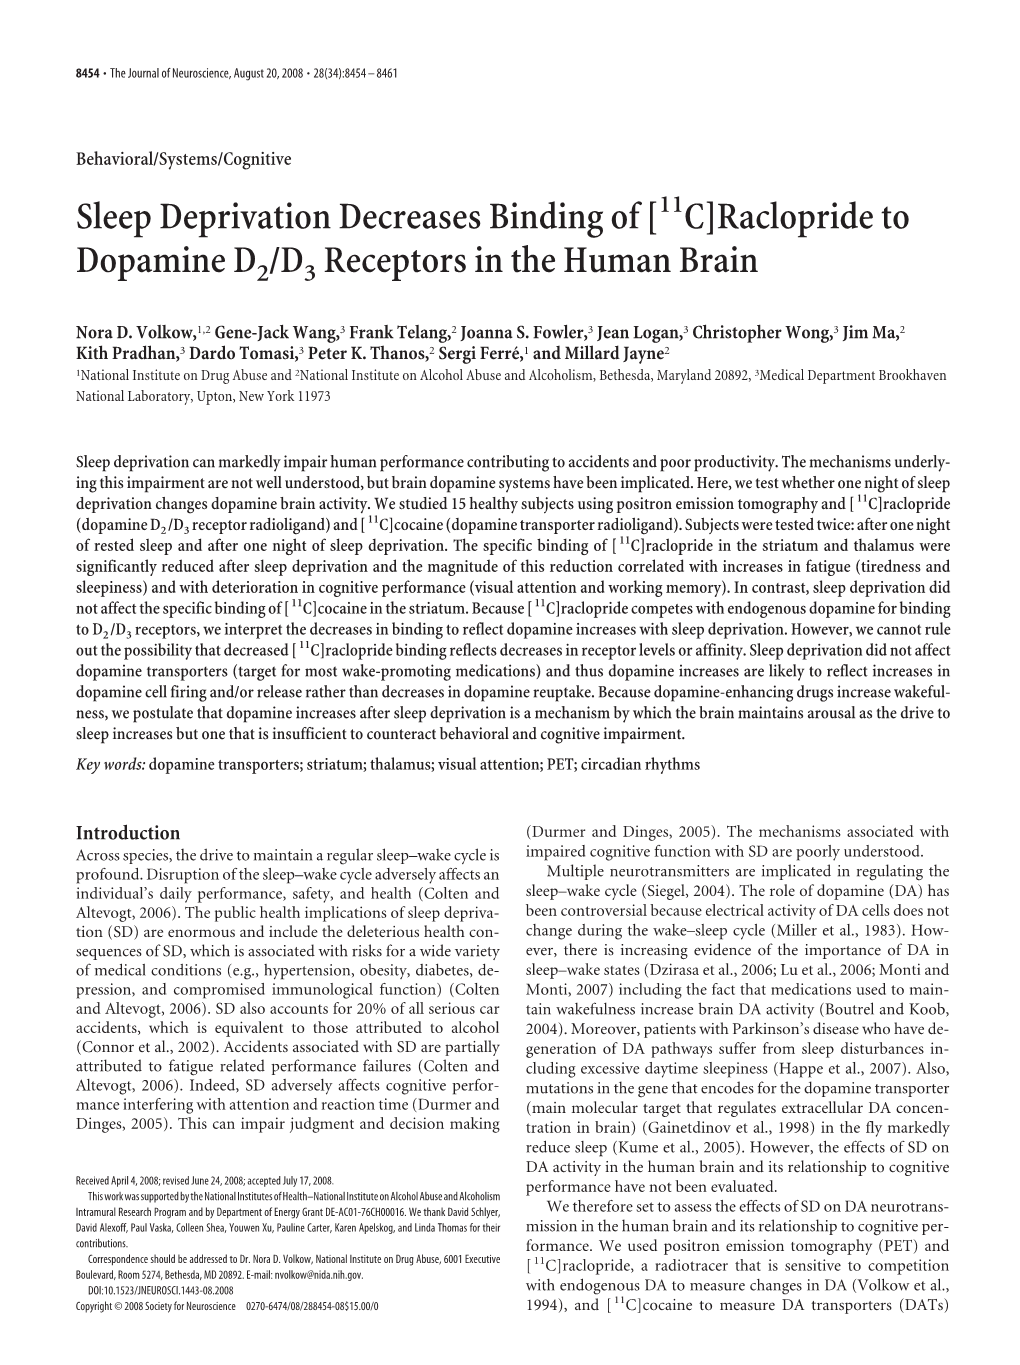 Sleep Deprivation Decreases Binding of [ C]Raclopride to Dopamine D2